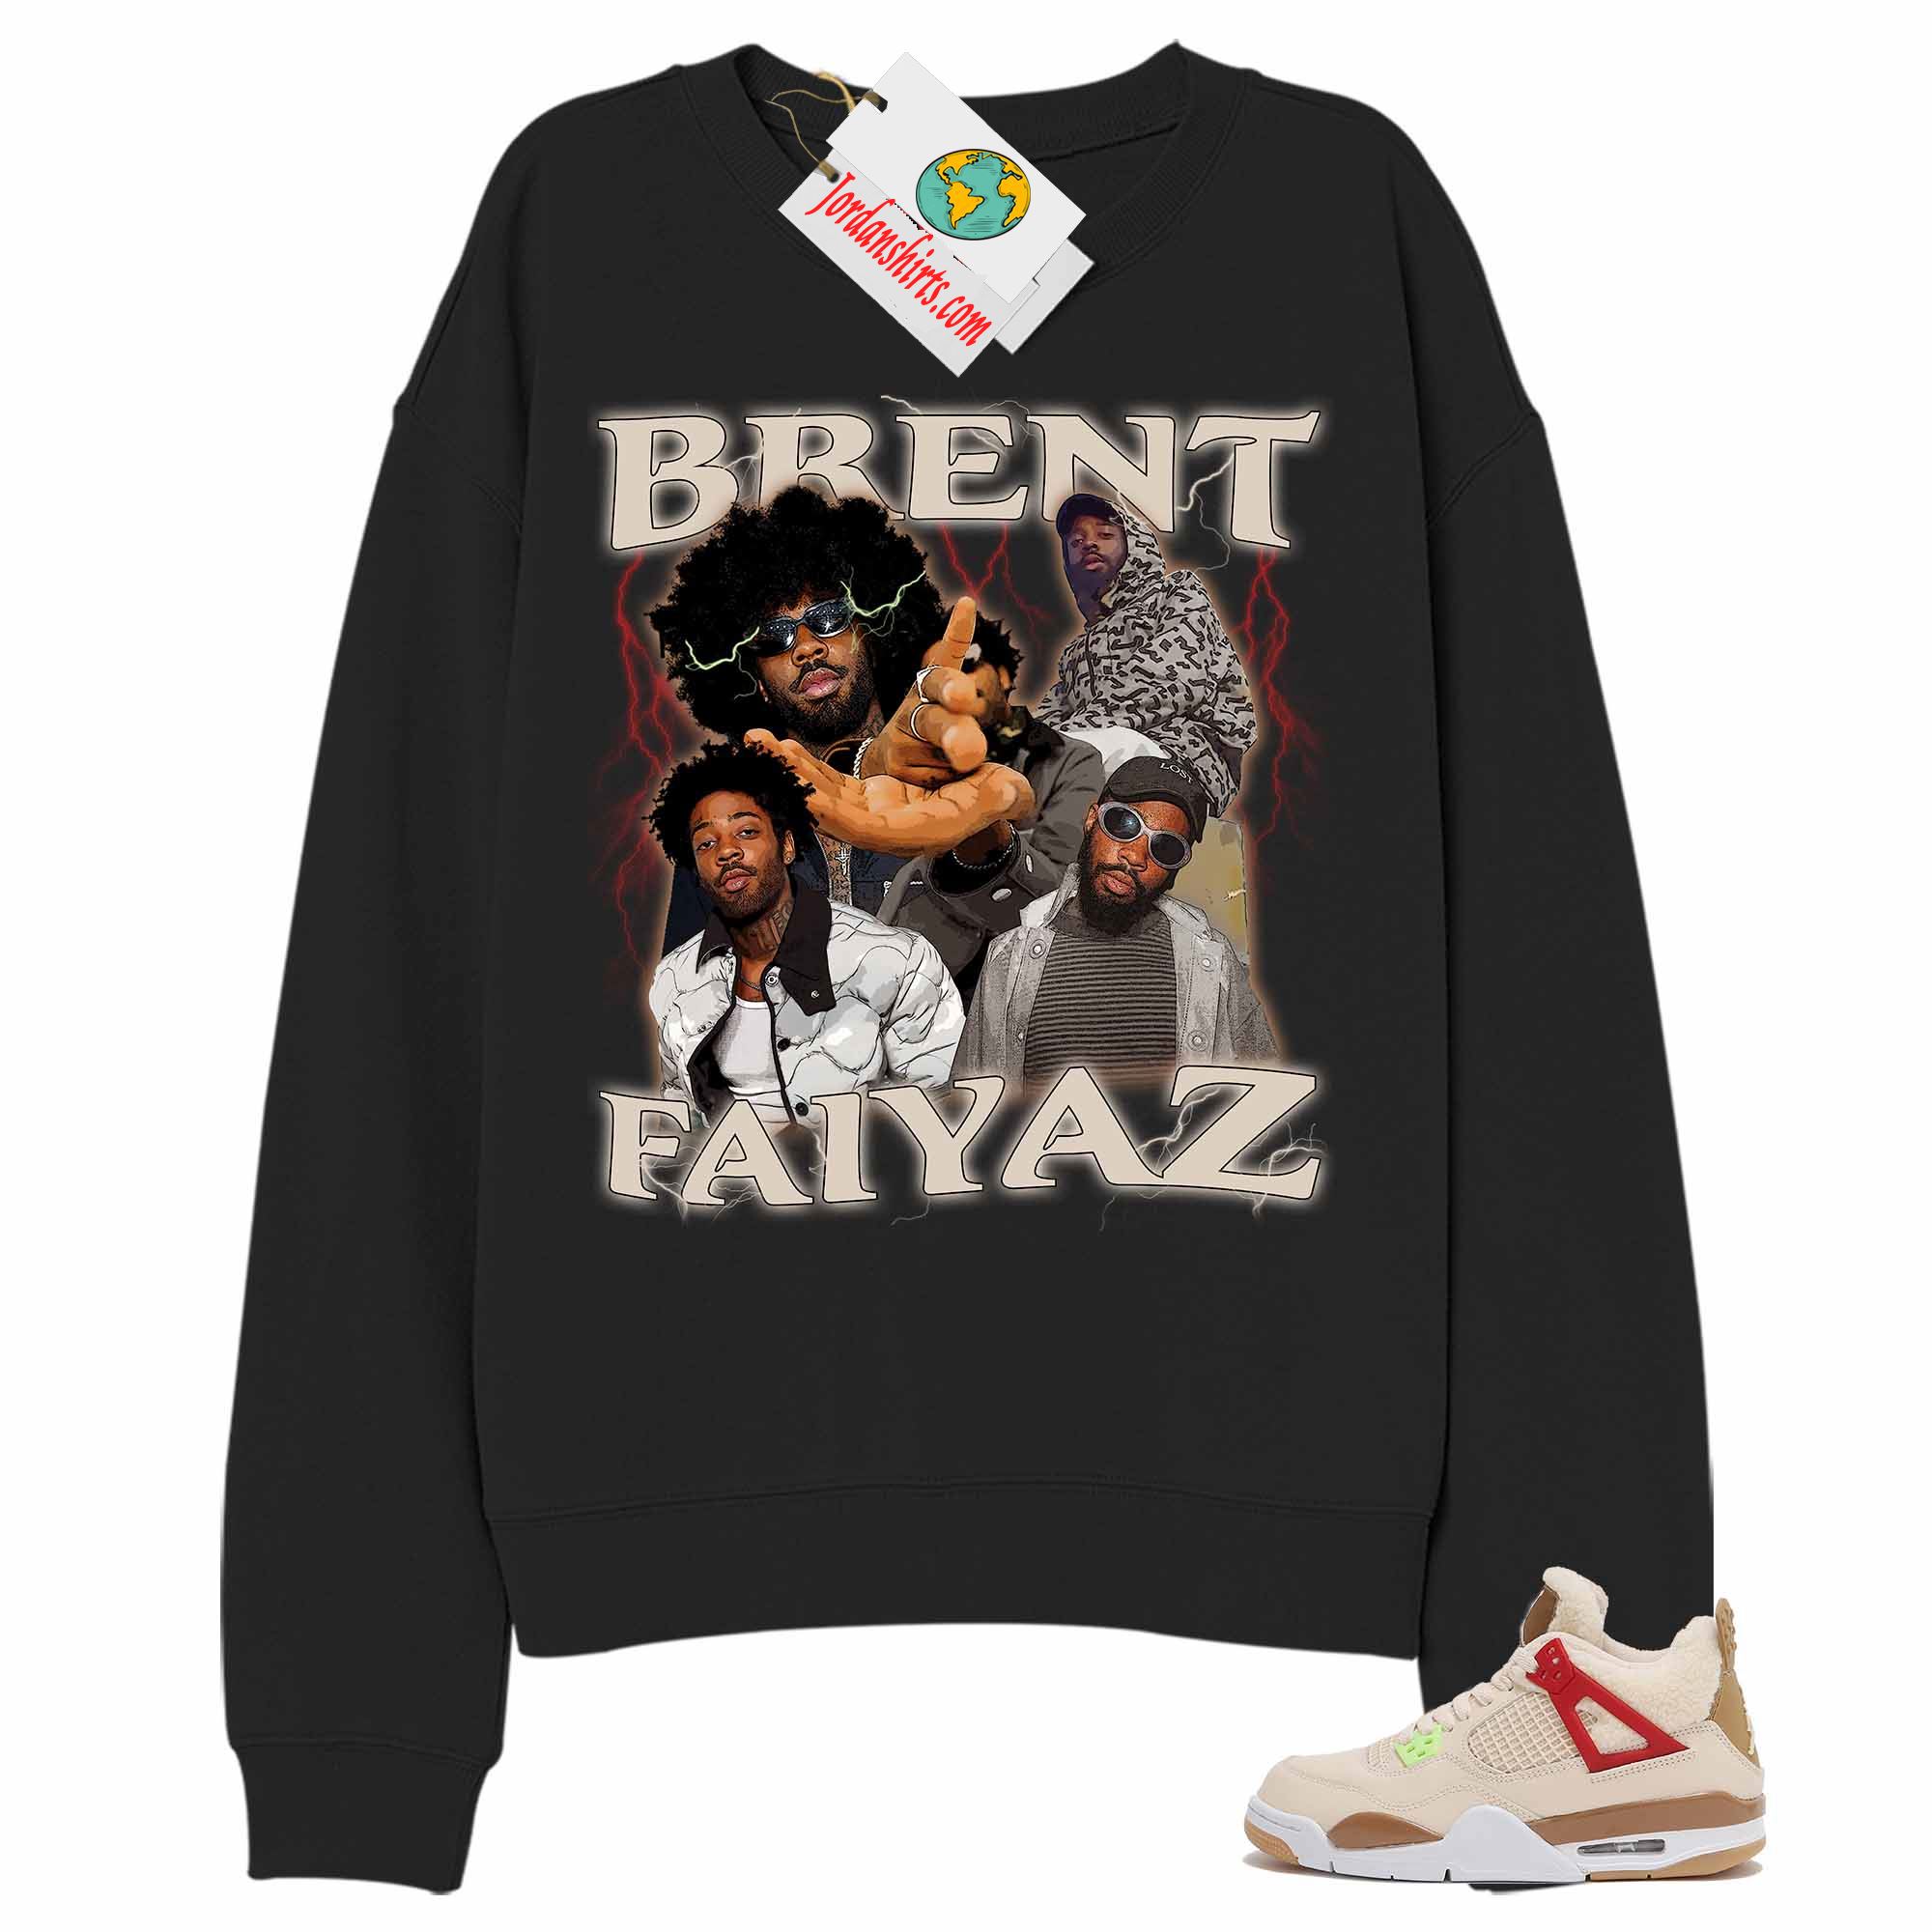 Jordan 4 Sweatshirt, Brent Faiyaz Retro Vintage 90s Hip Hop Raptees Black Sweatshirt Air Jordan 4 Wild Things 4s Full Size Up To 5xl